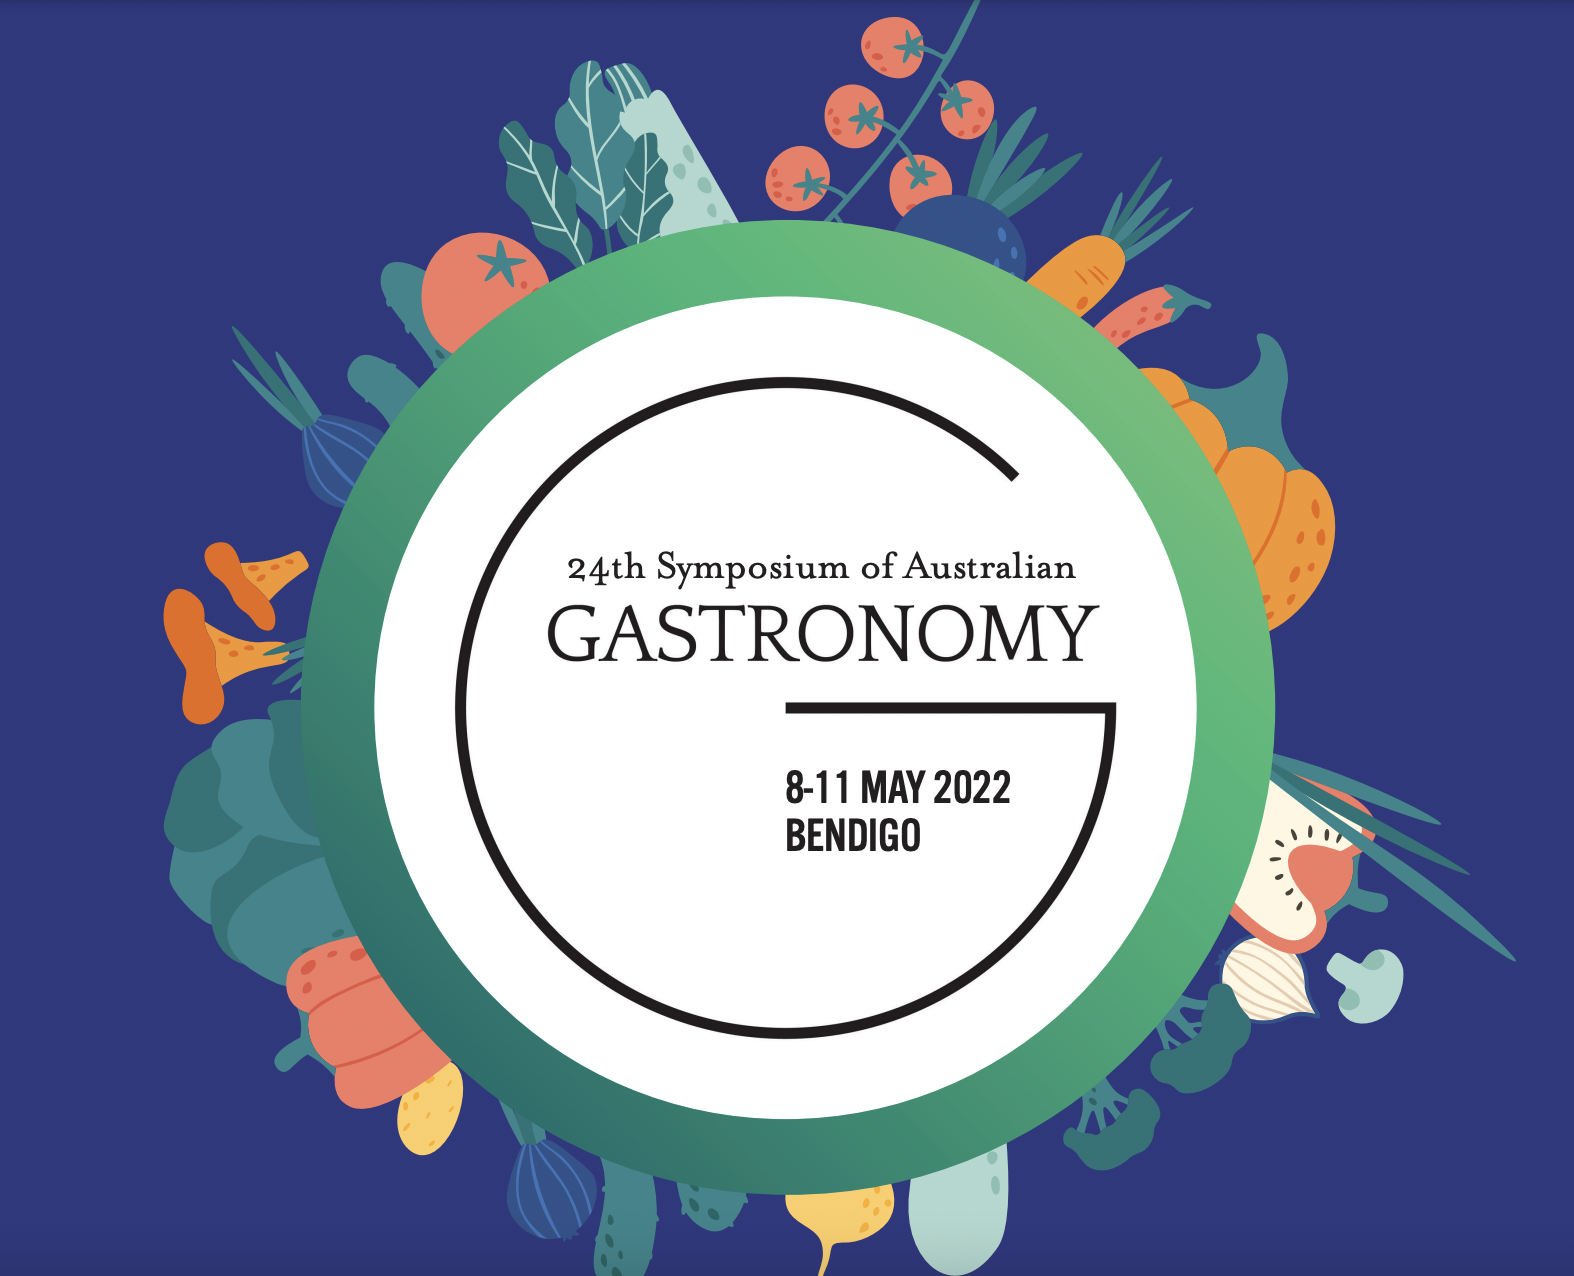 Symposium of Australian Gastronomy